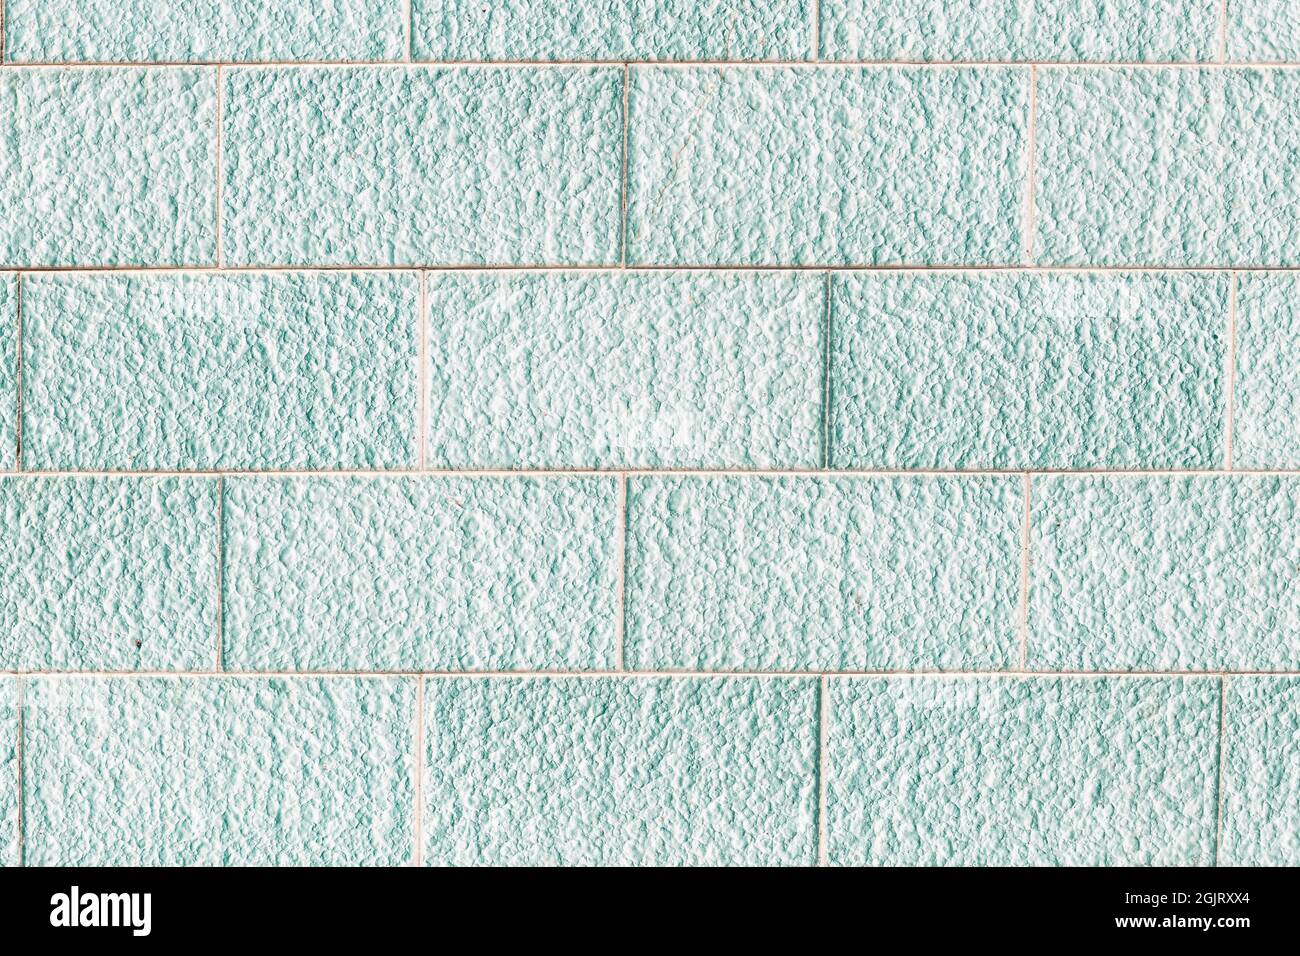 Background texture of rectangular turquoise ceramic tiles. Stock Photo